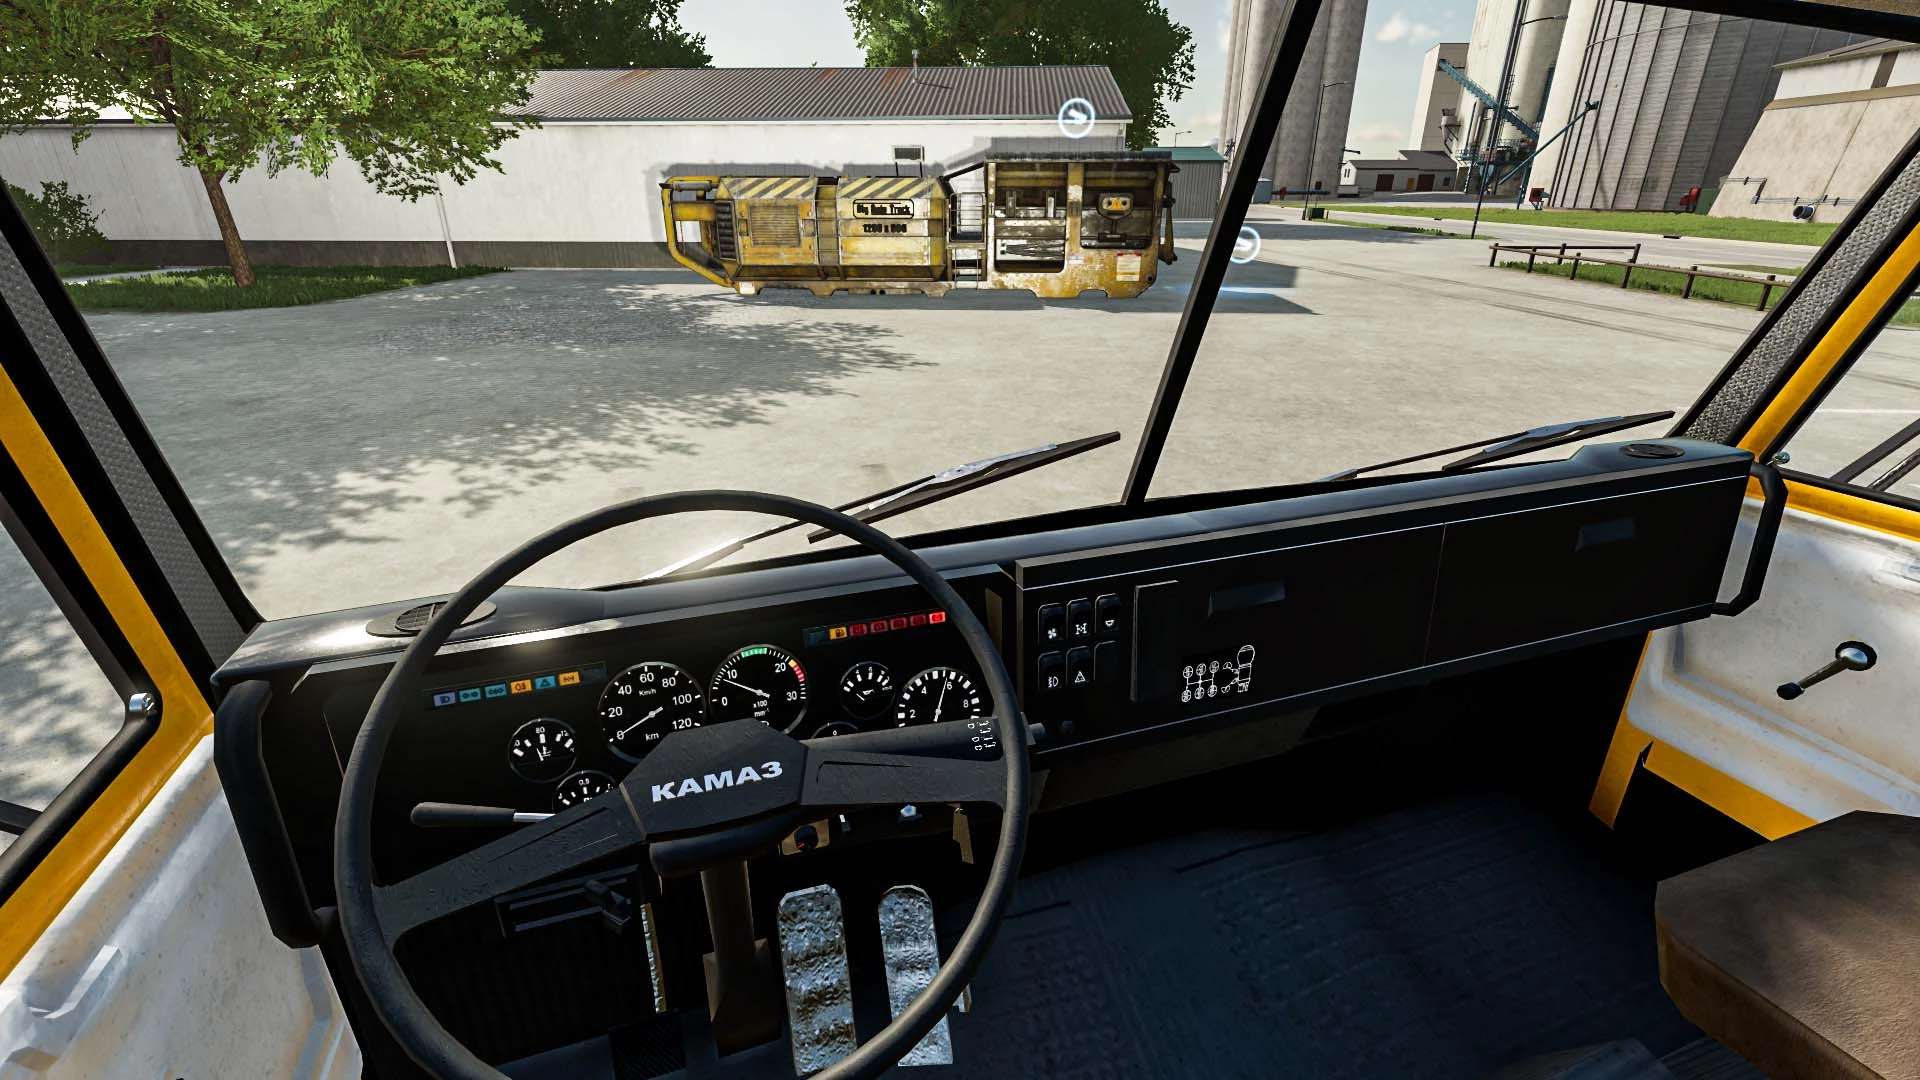 Kamaz Truck v1.1.0.0 | Landwirtschafts Simulator 22 Mod | FS22 Mod